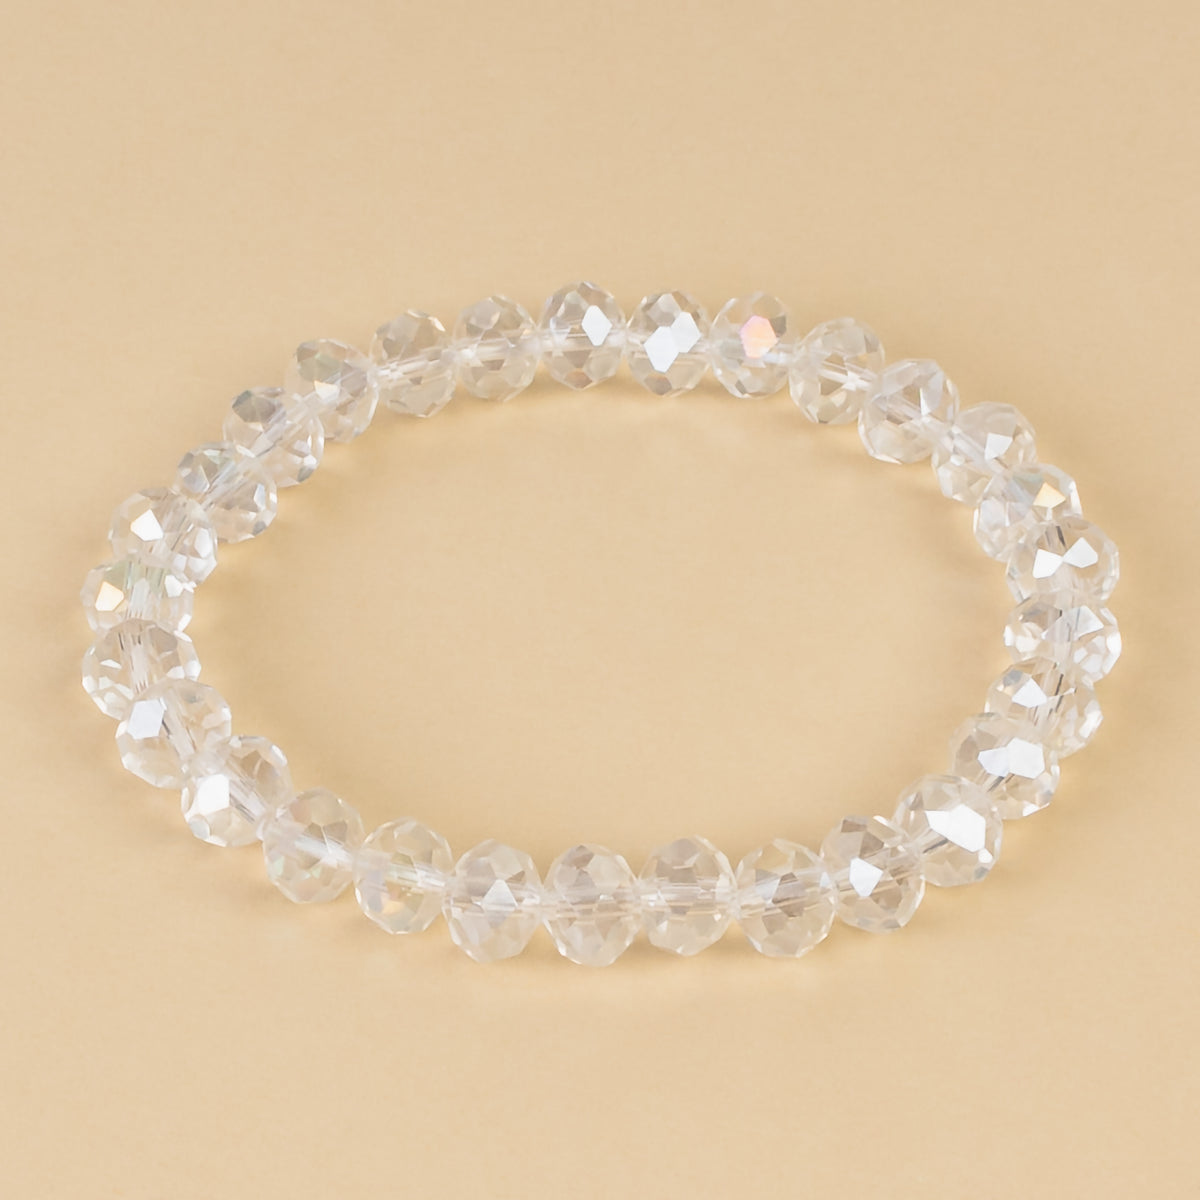 74604 - 20 - Crystal Bracelet - Clear AB